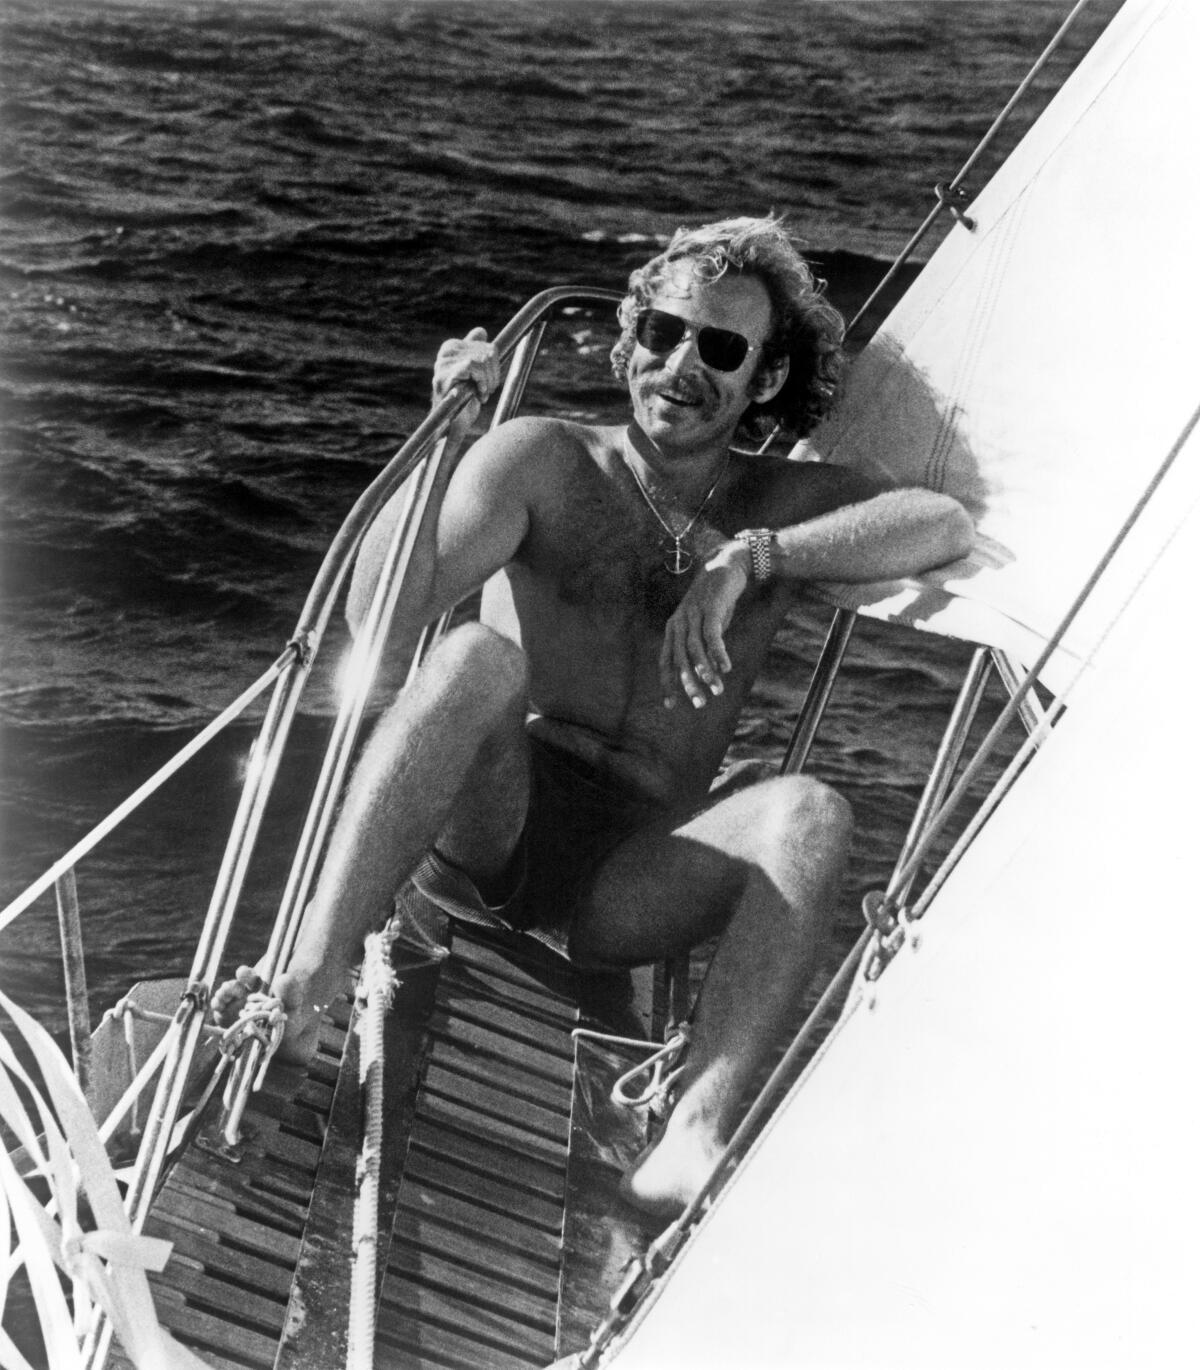 A man on a sailboat